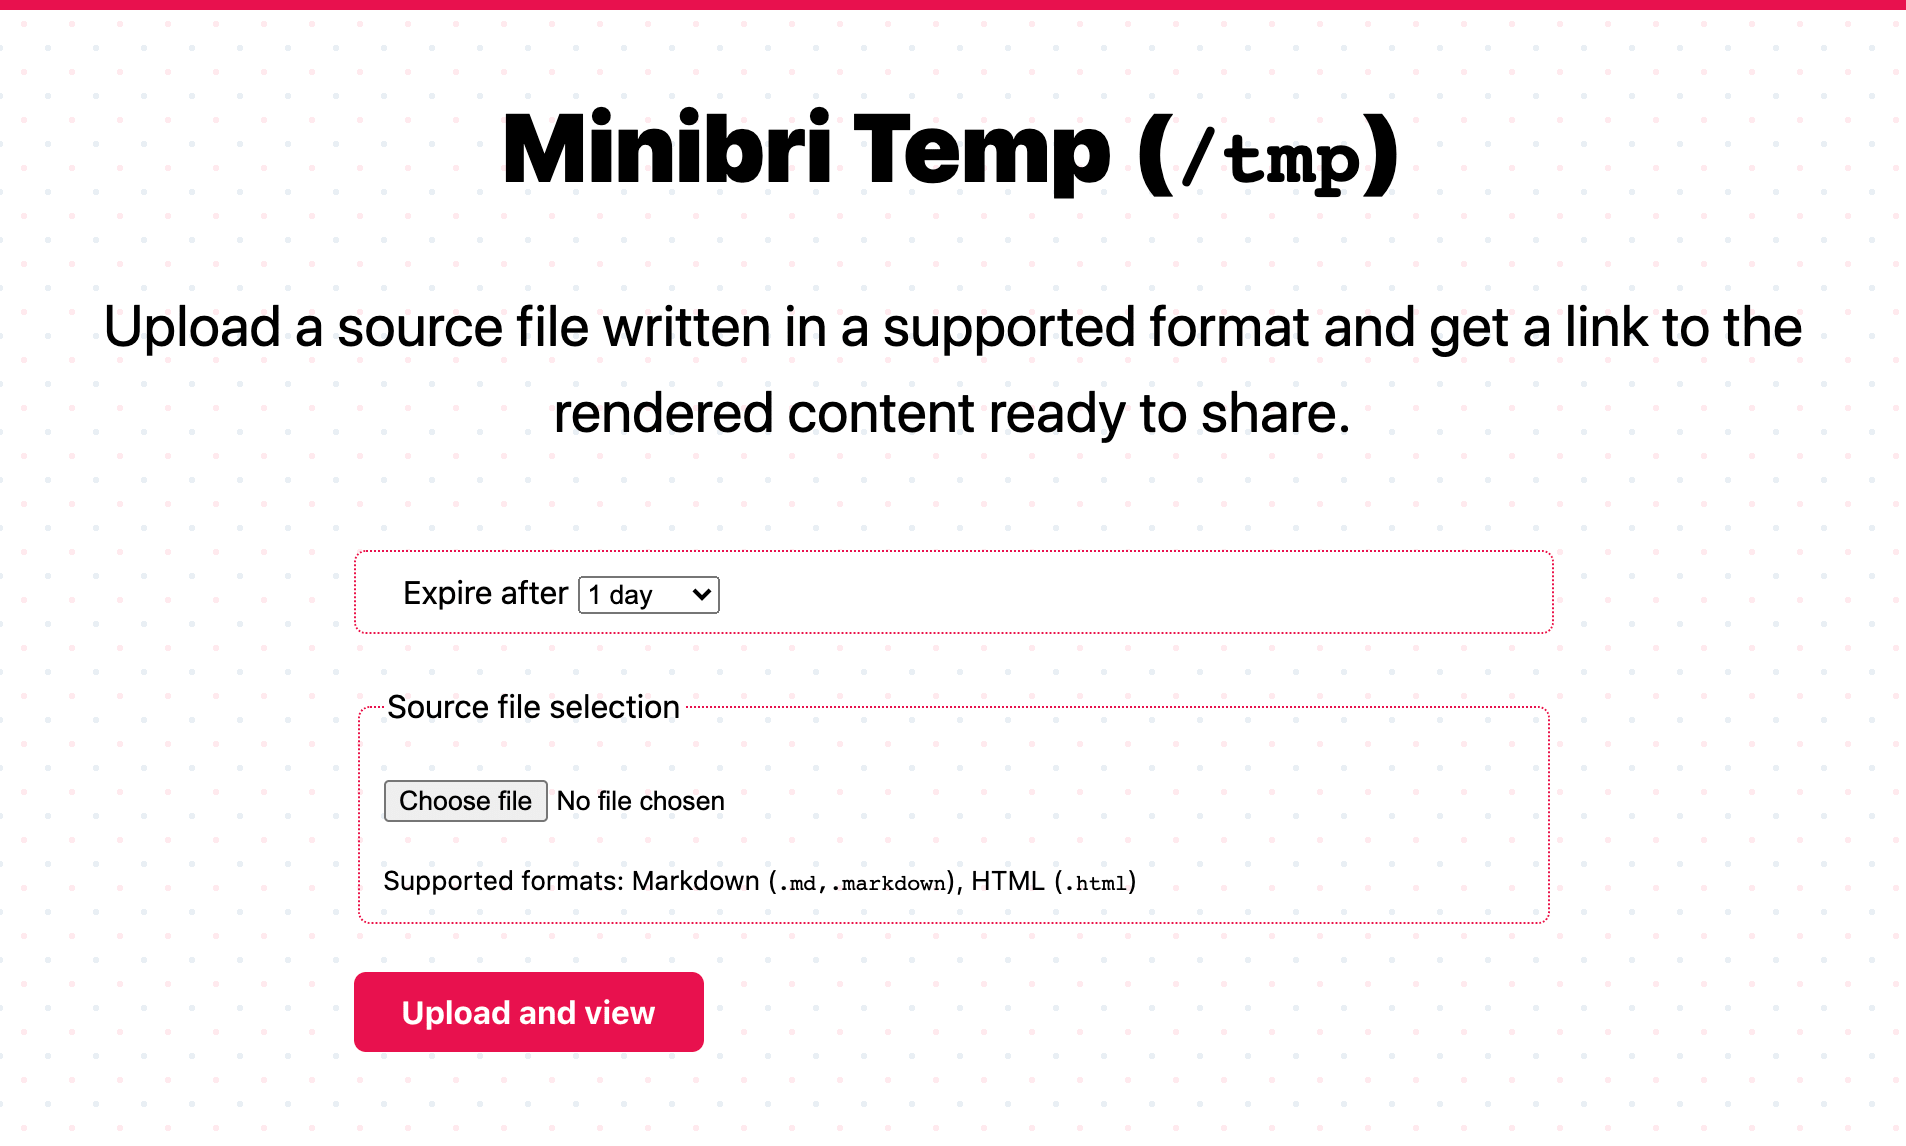 Minibri Temp home page